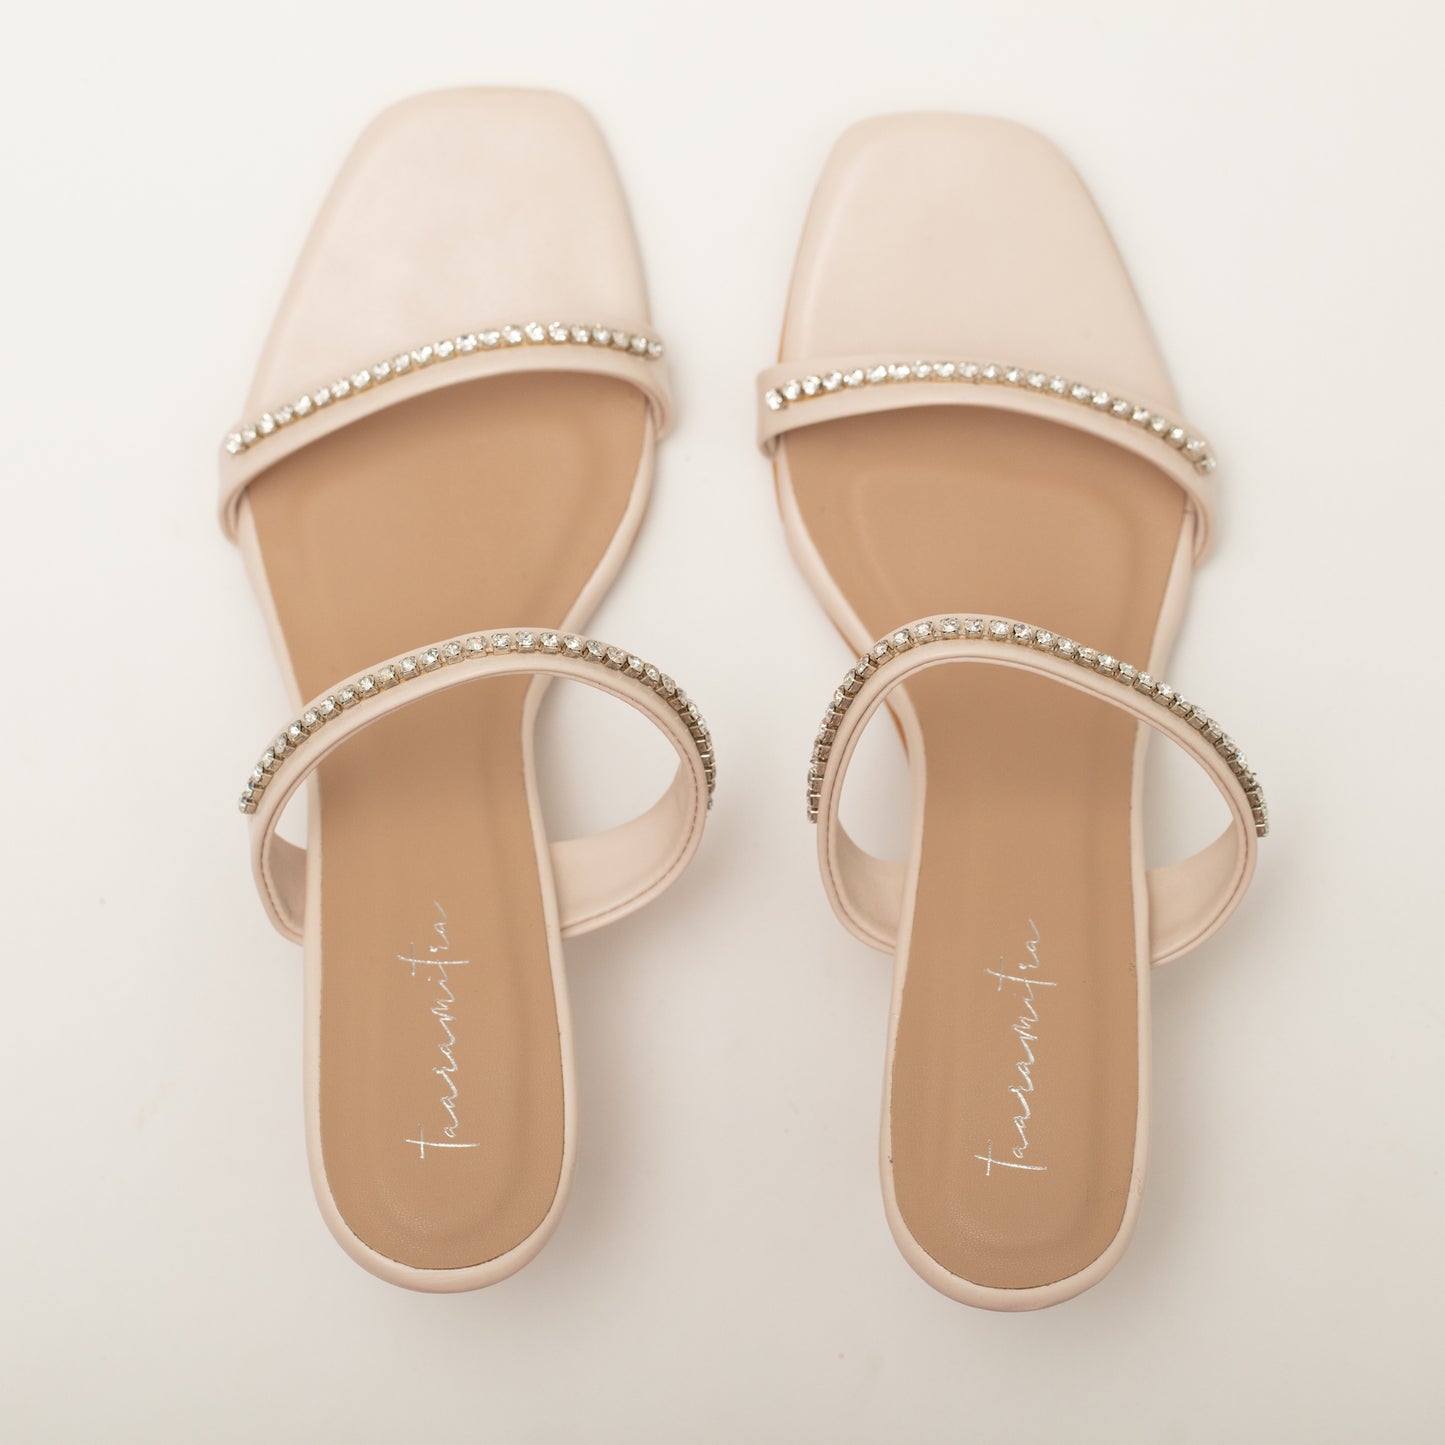 Daisy studded white heels